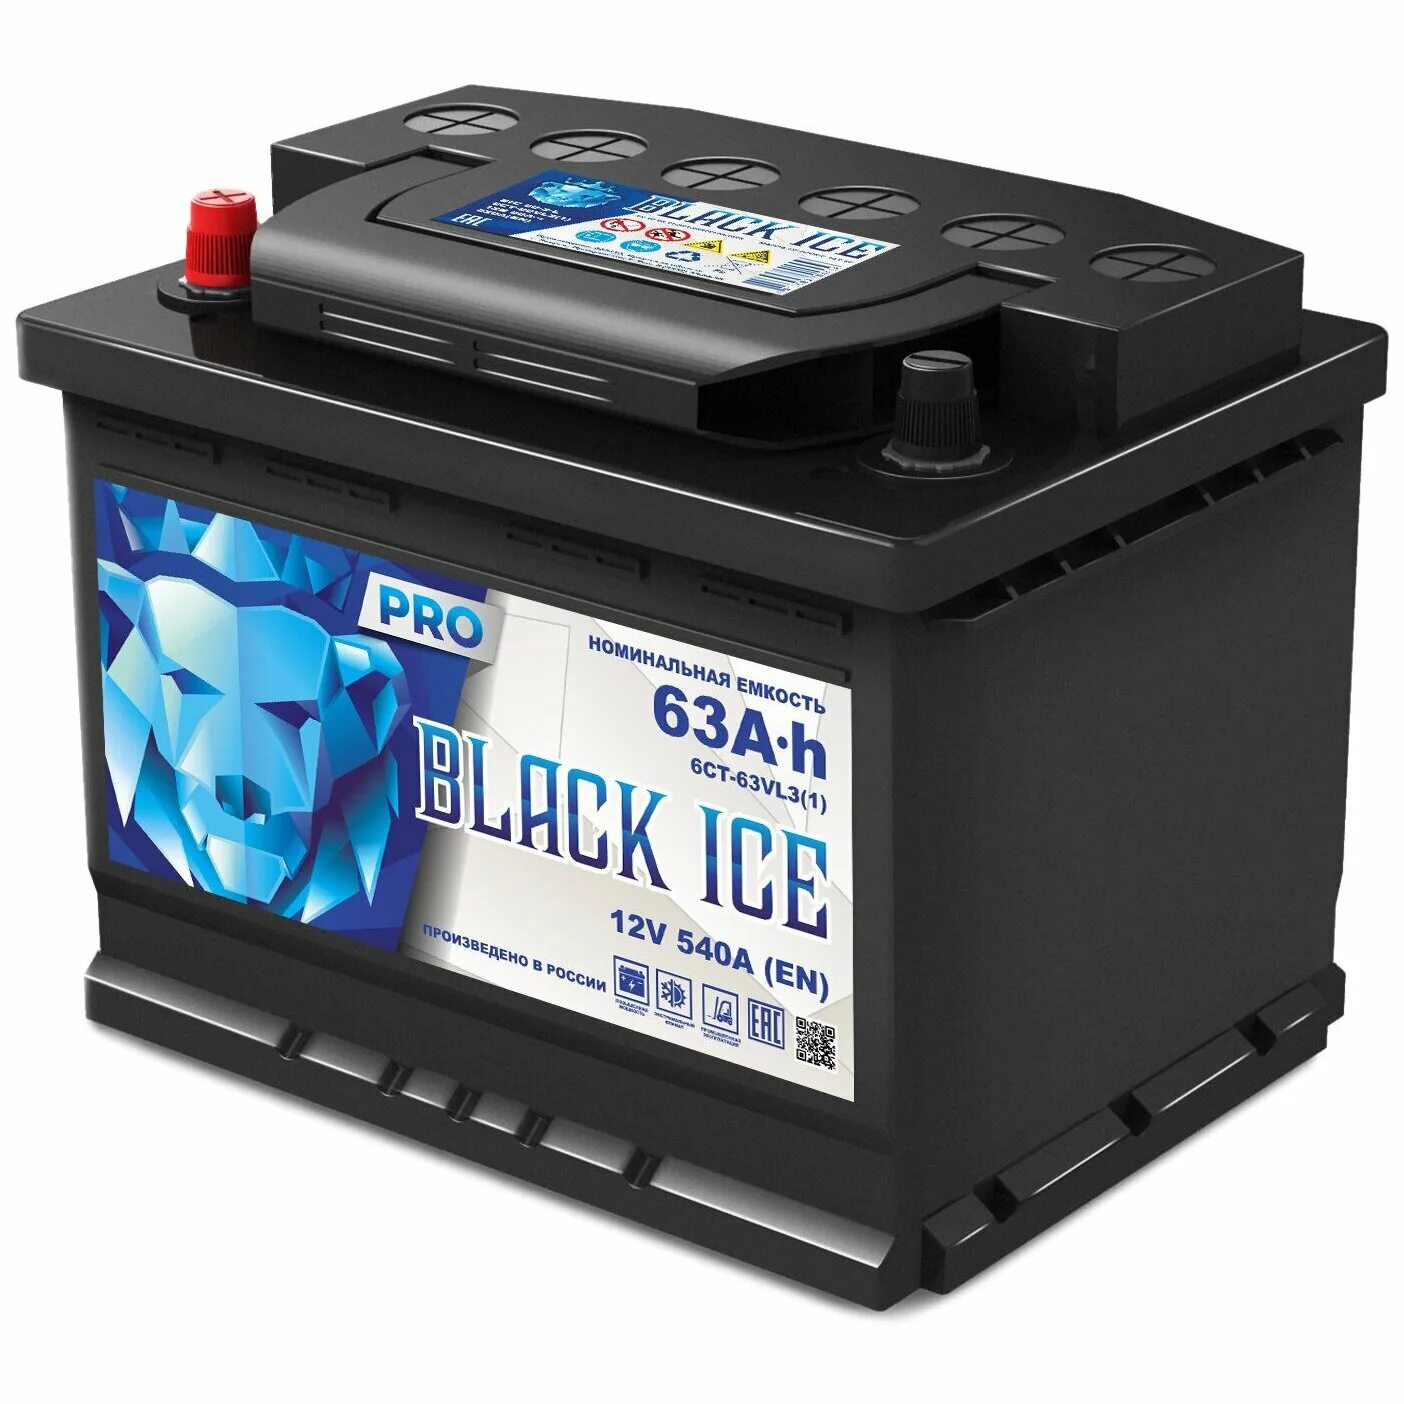 Battery black. Автомобильный аккумулятор Black Ice Pro 6ст-63.1 VL. Аккумулятор Black Ice 6ст. Аккумулятор Black Ice 60. Black Ice 190 Ач аккумулятор.